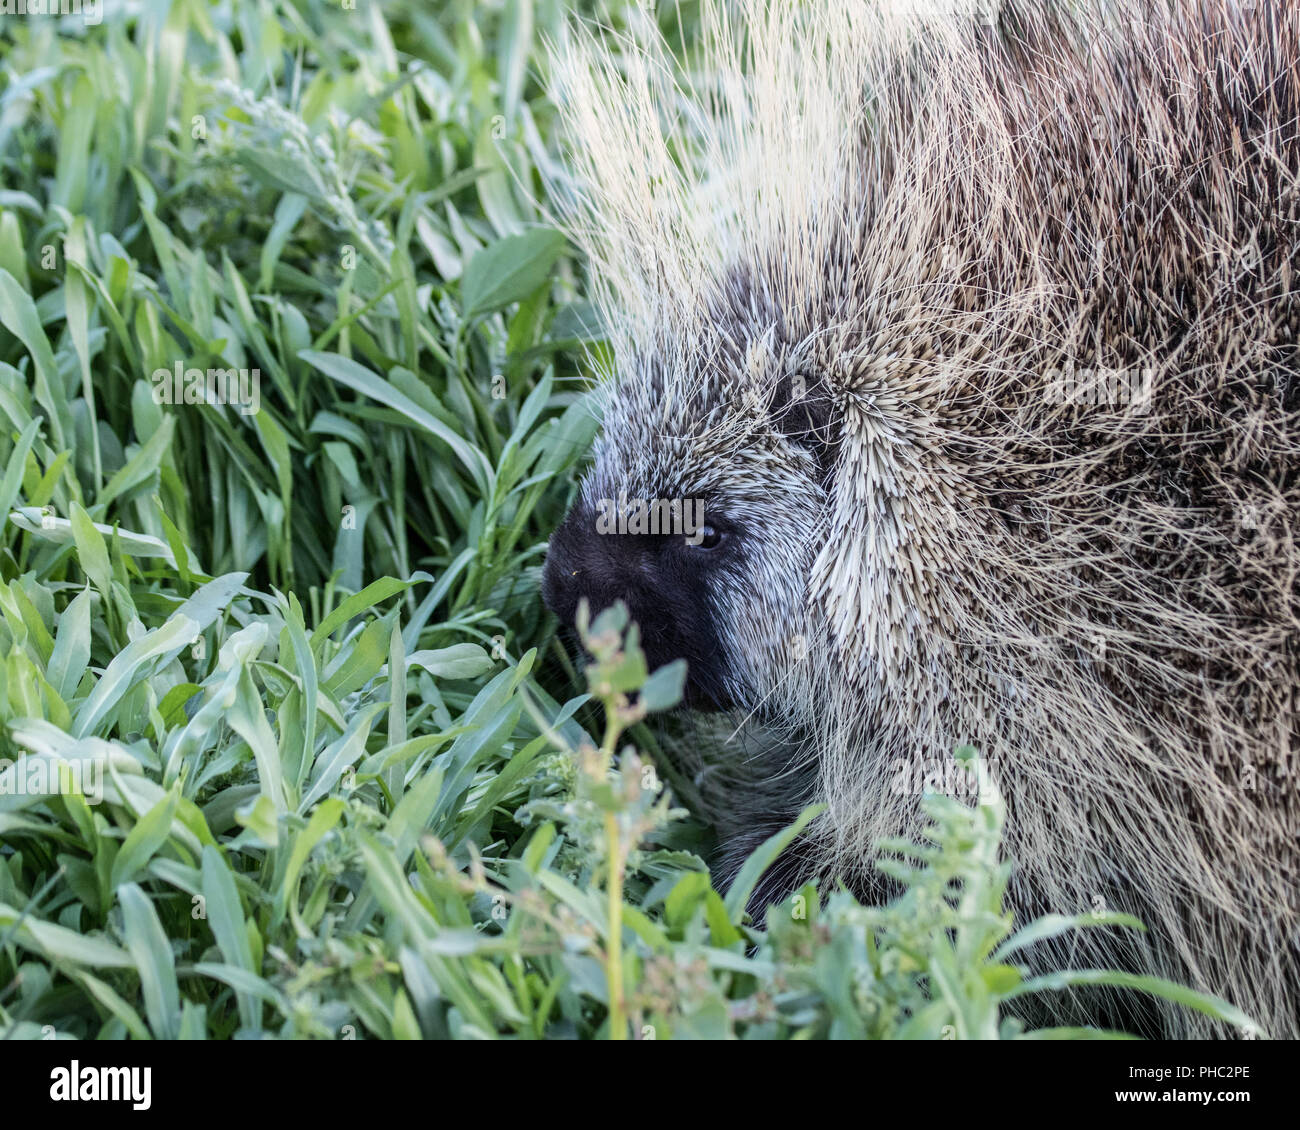 A large porcupine hunkers down among lush vegetation. Stock Photo